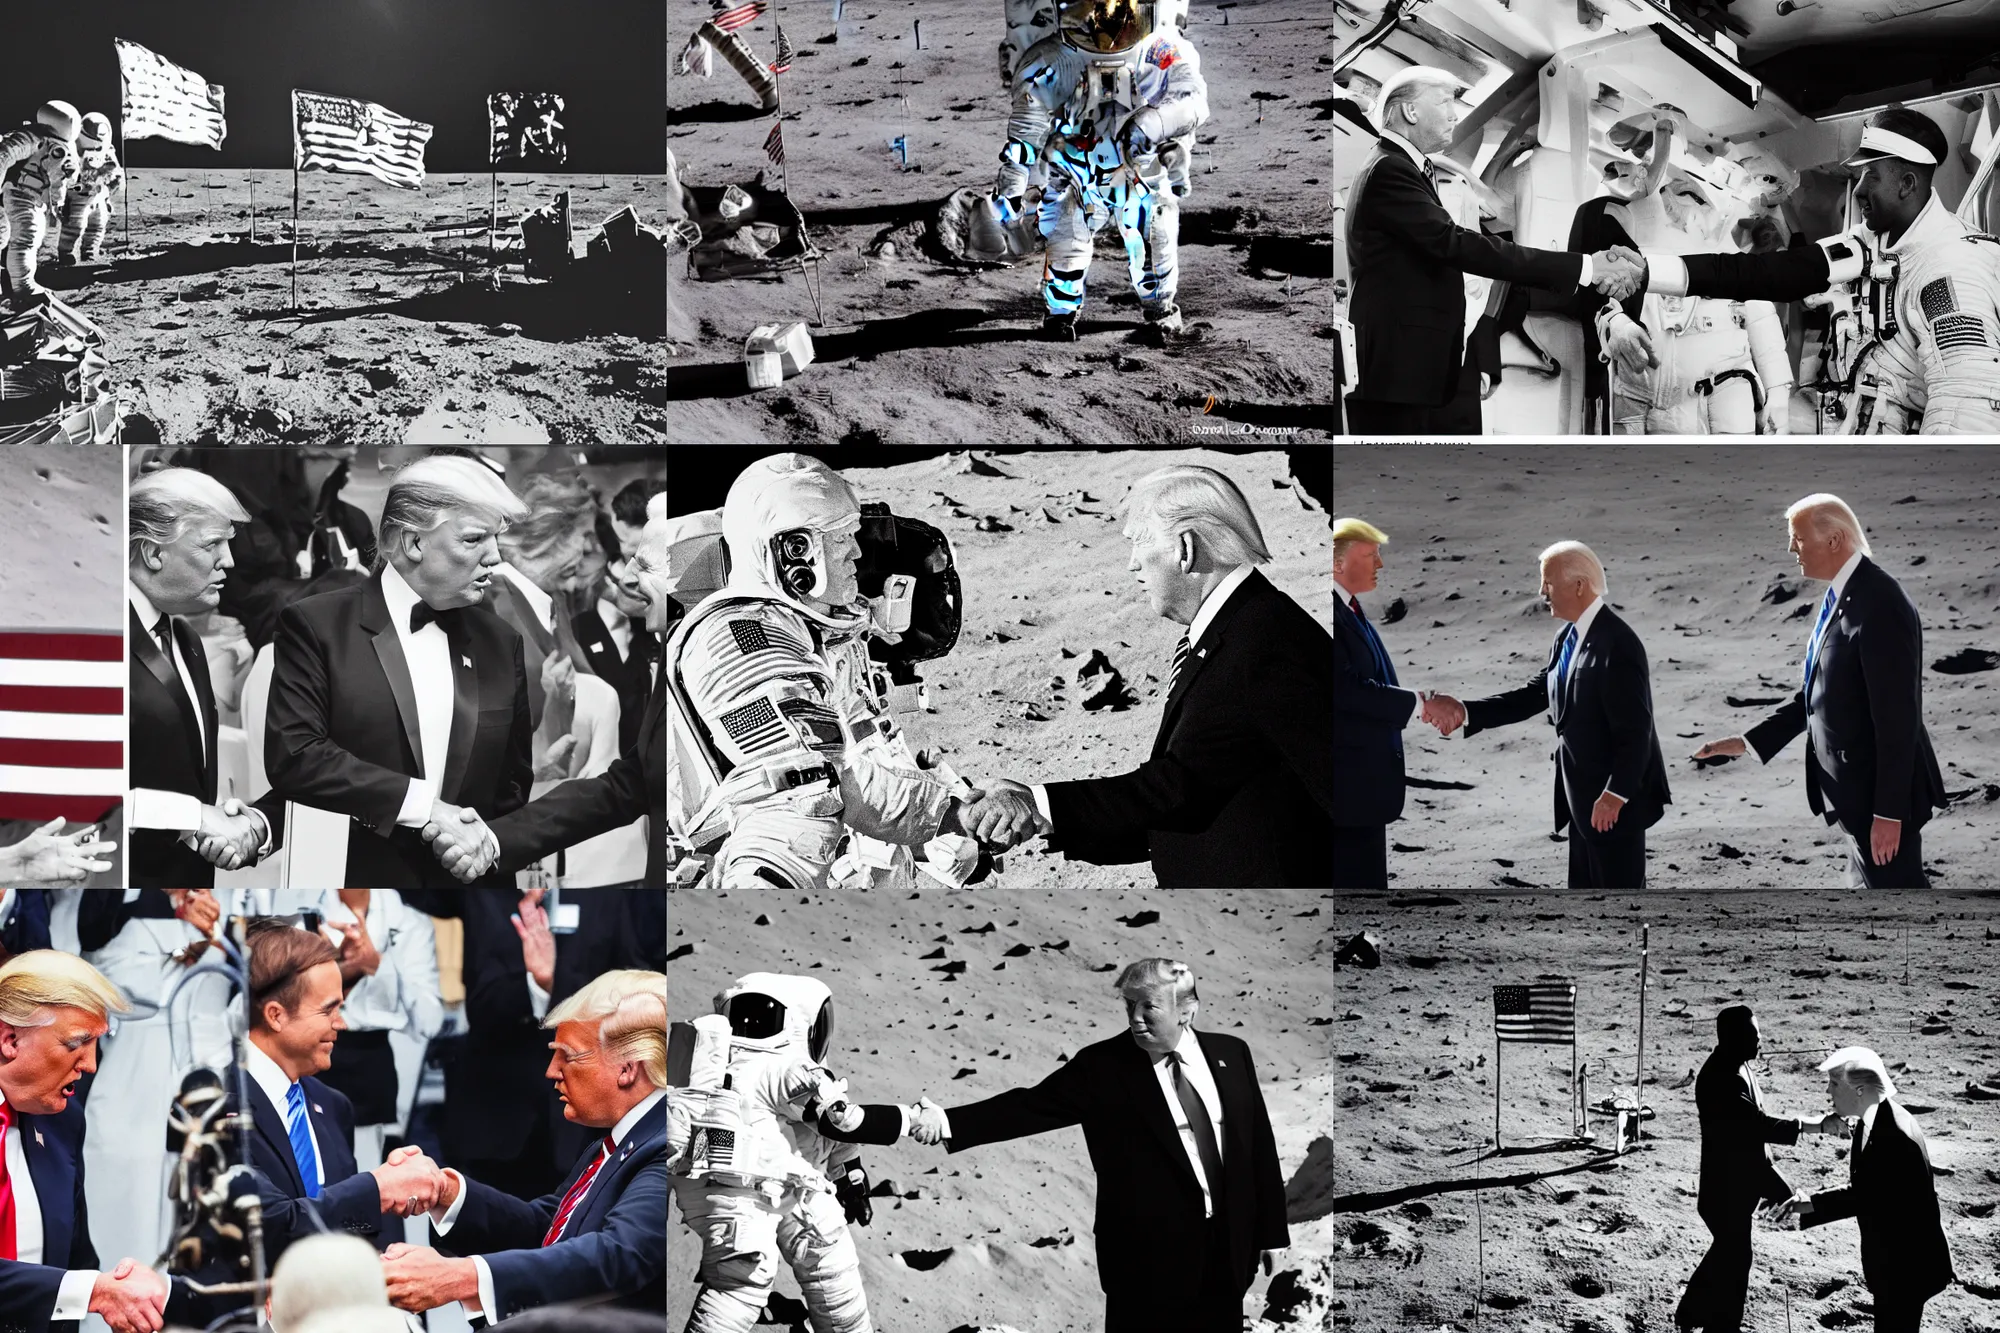 Prompt: lens camera photo cinematic portrait donald trump shaking hands with joe biden on the moon, award winning